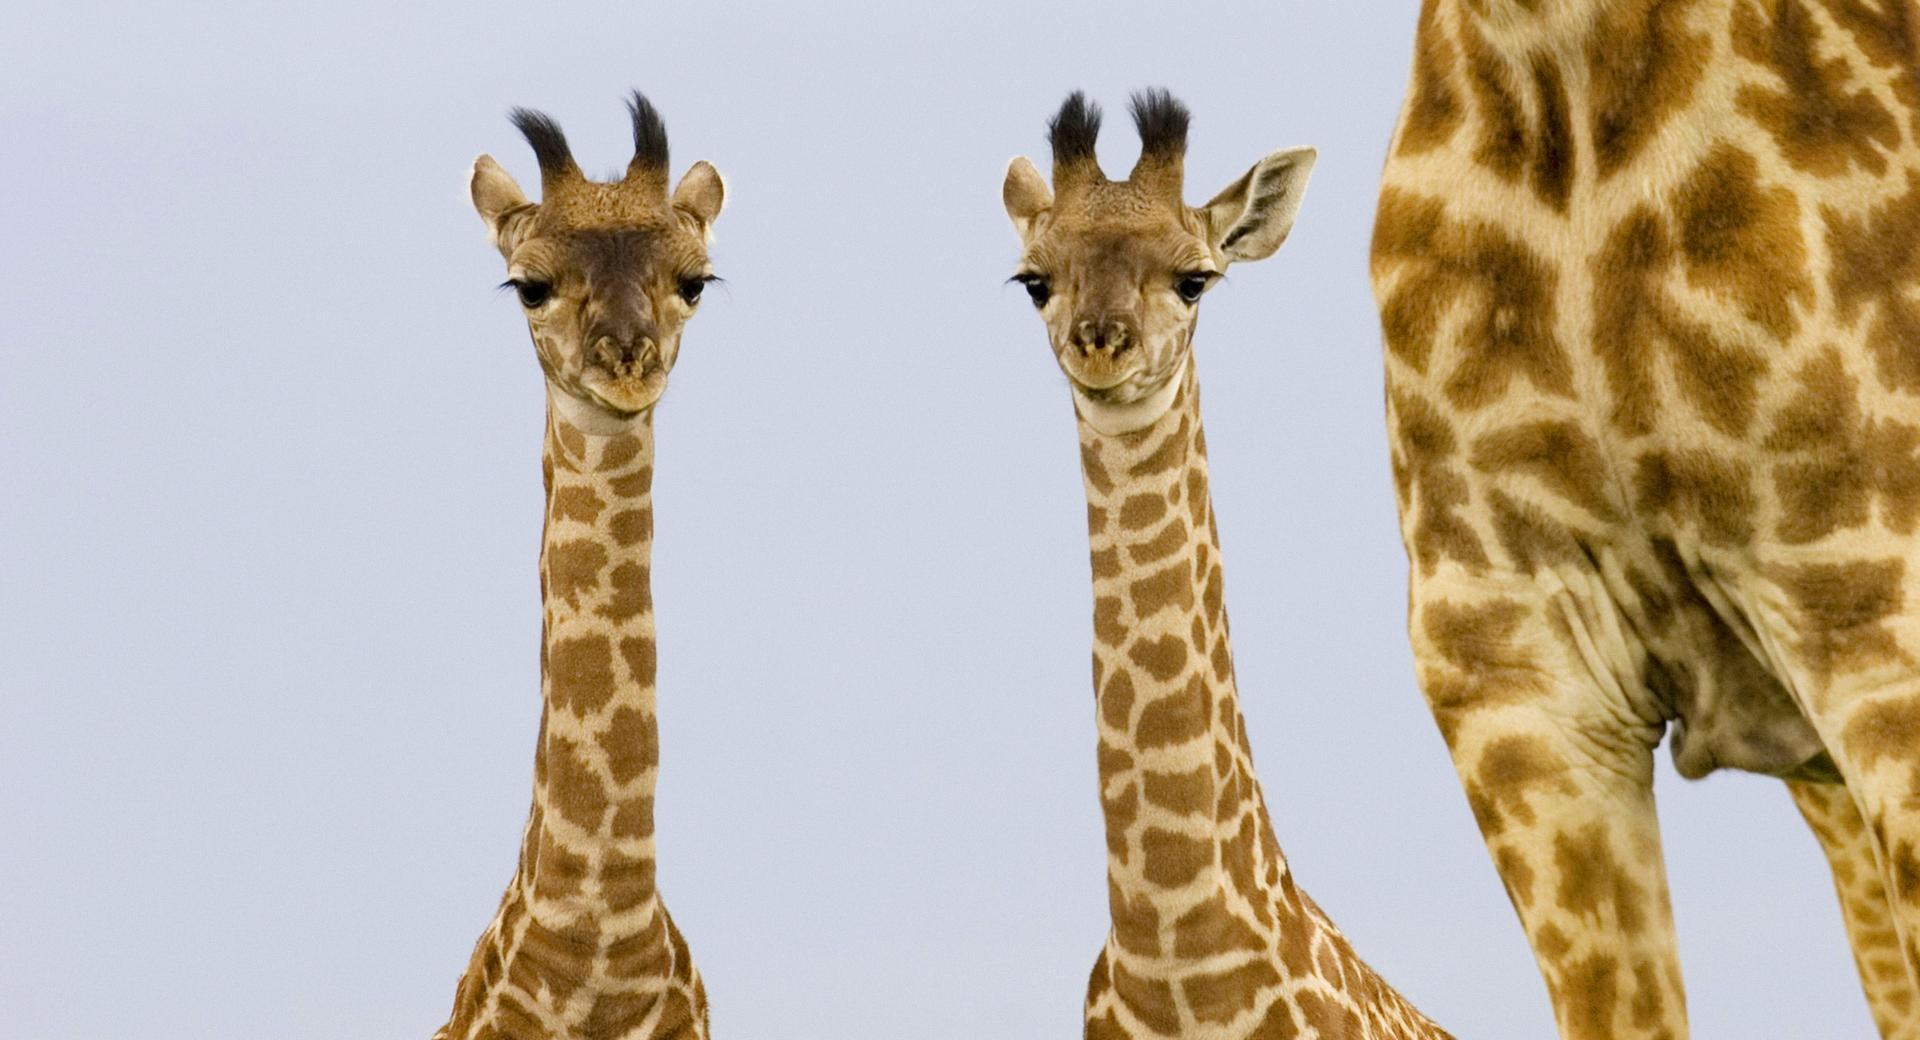 Two Newborn Giraffe Masai Mara Kenya at 750 x 1334 iPhone 6 size wallpapers HD quality